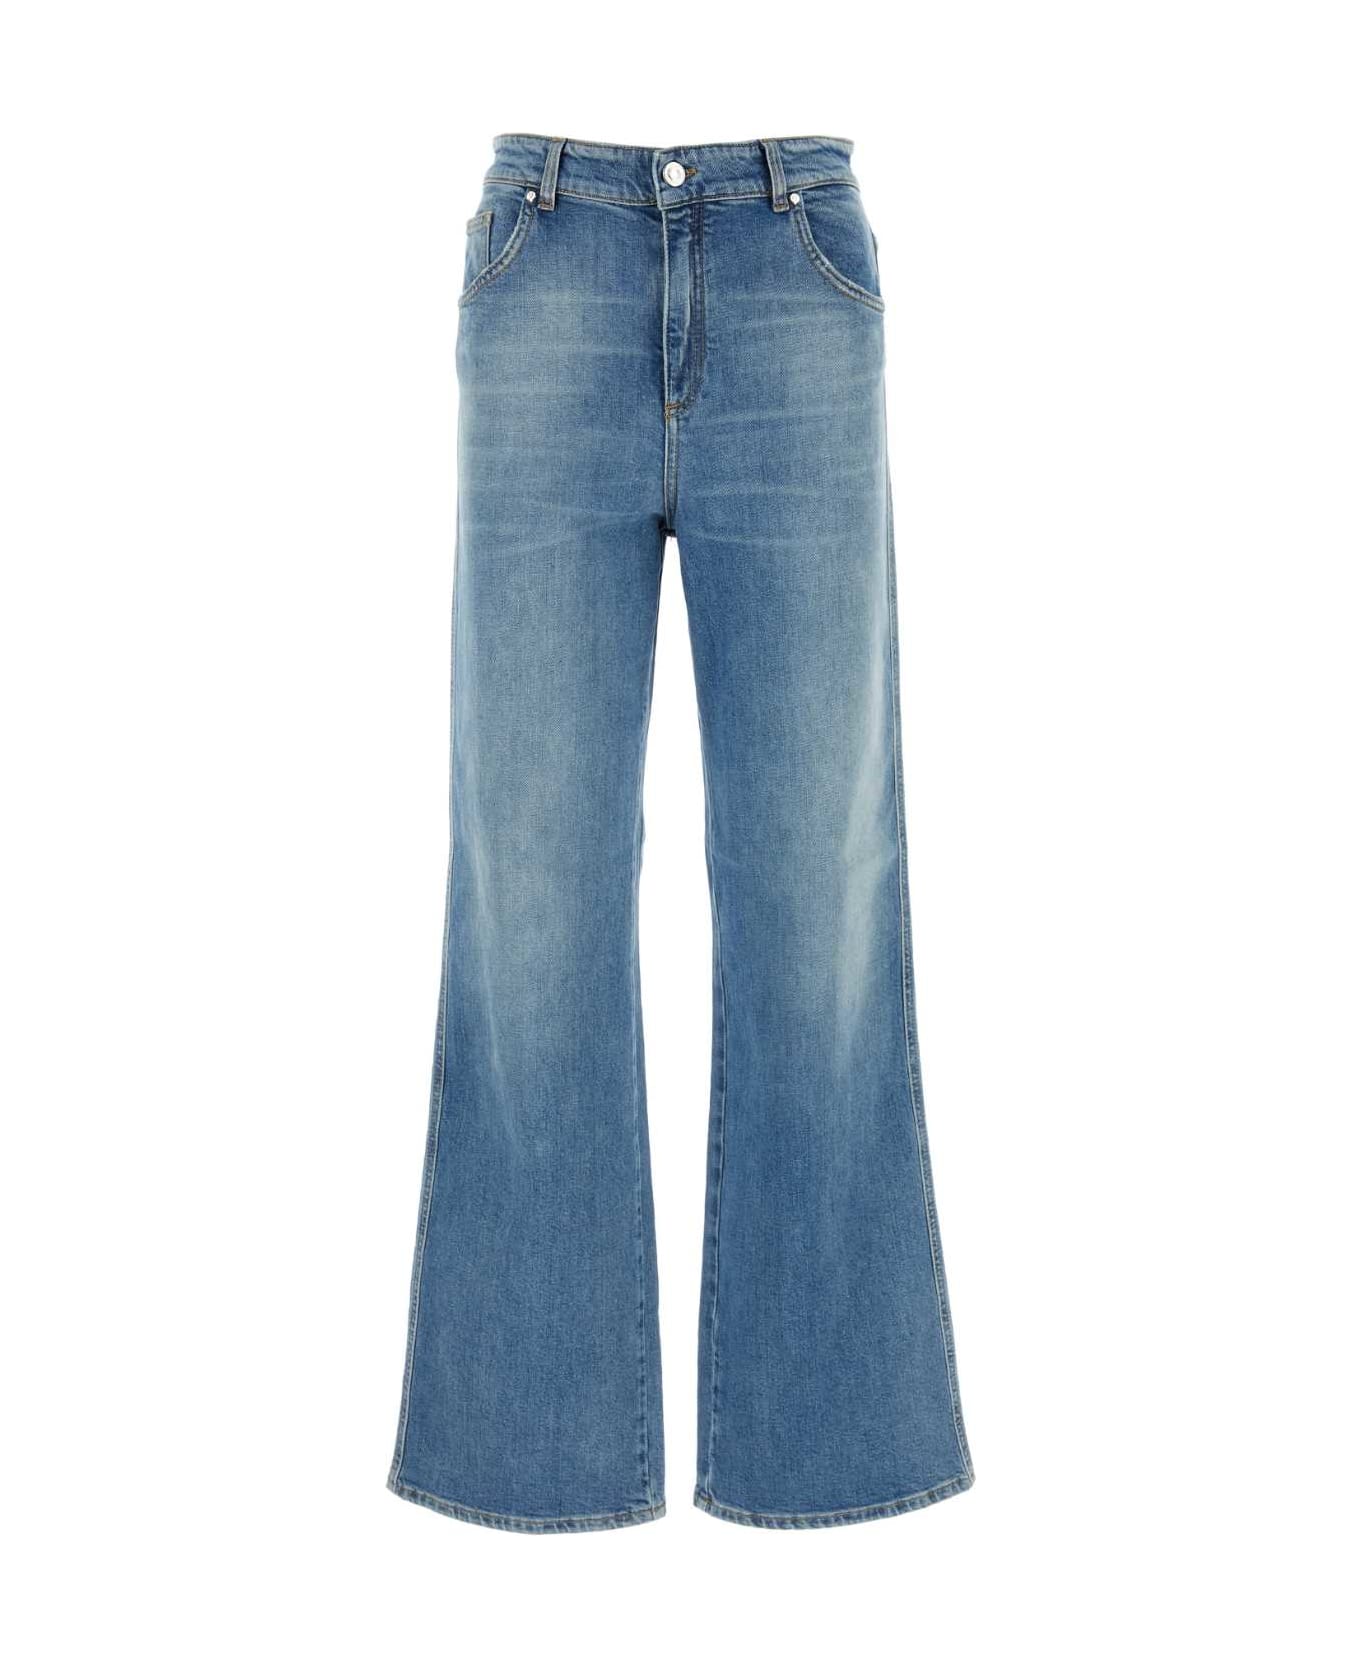 Blumarine Stretch Denim Jeans - ALLURE デニム